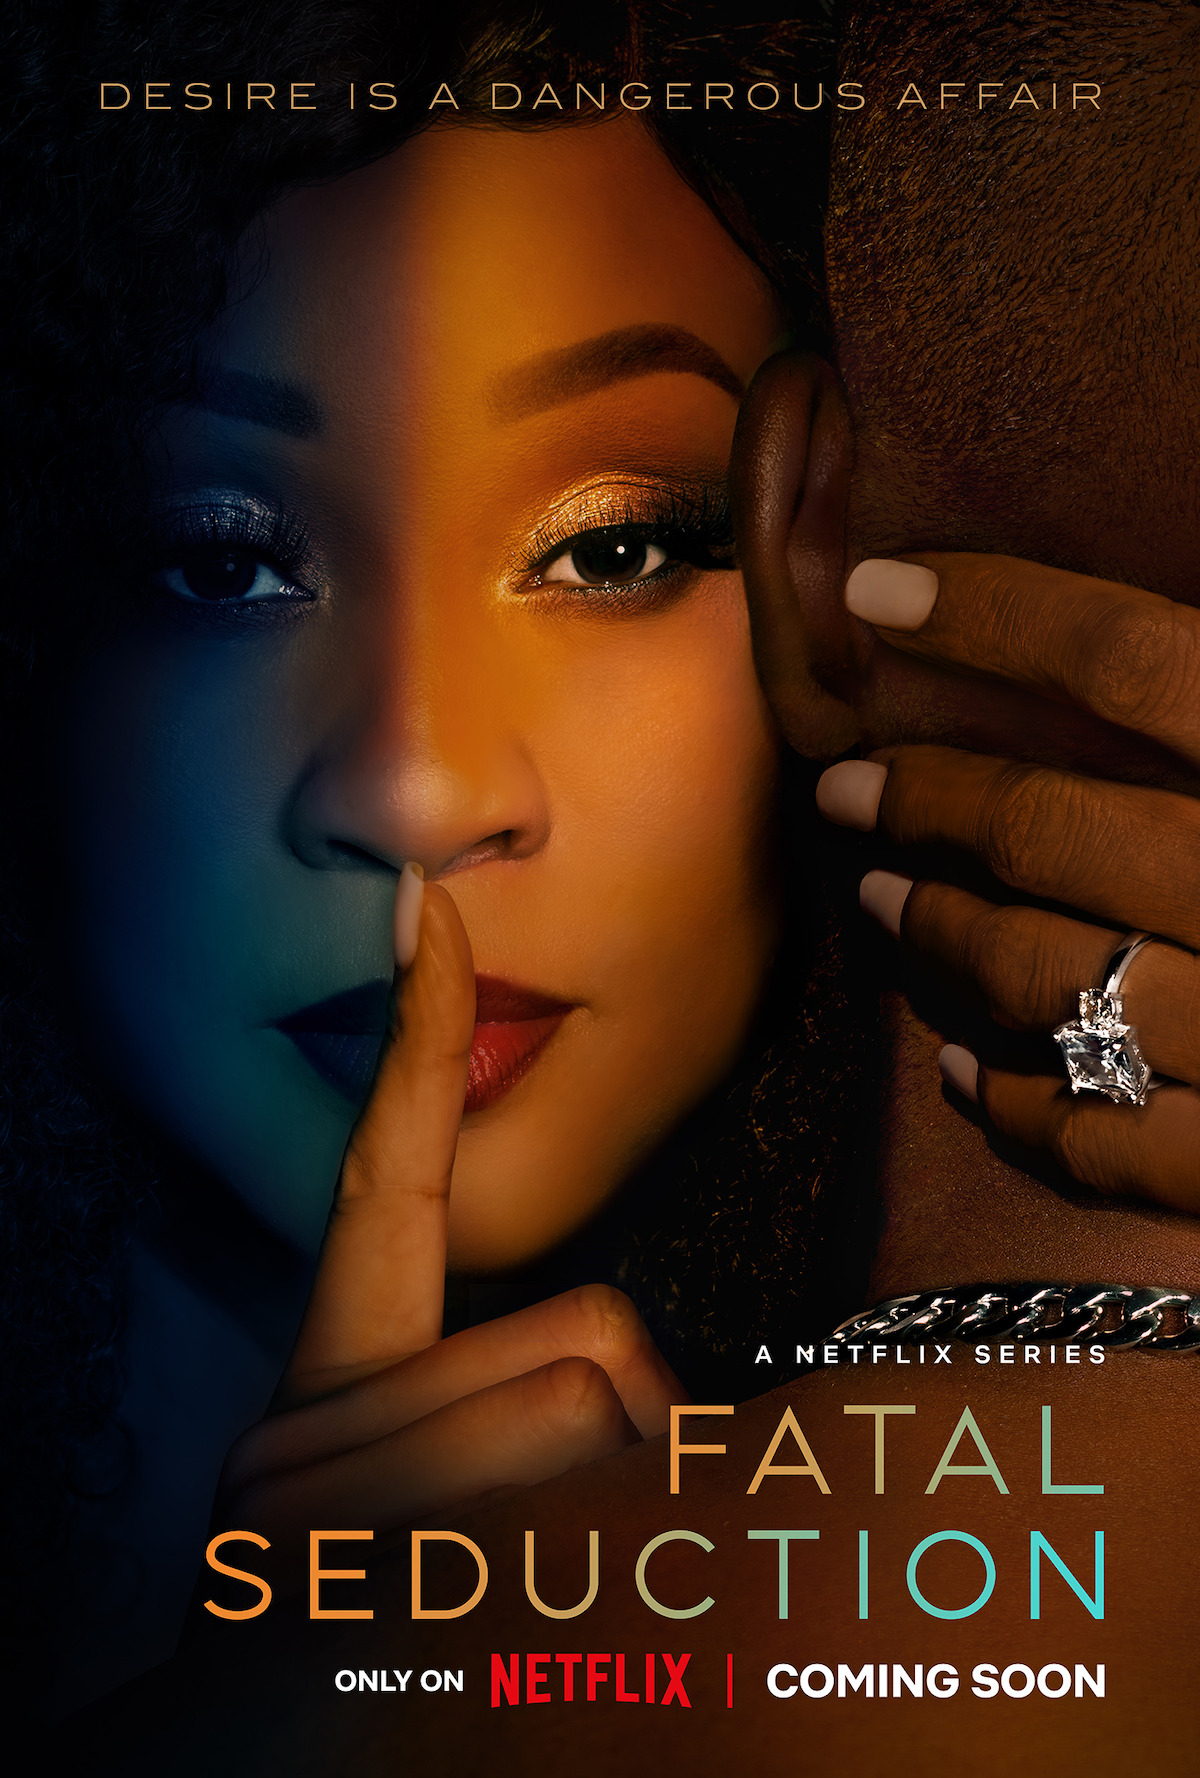 Fatal Seduction Cast, Plot, Release Date and Trailer picture image